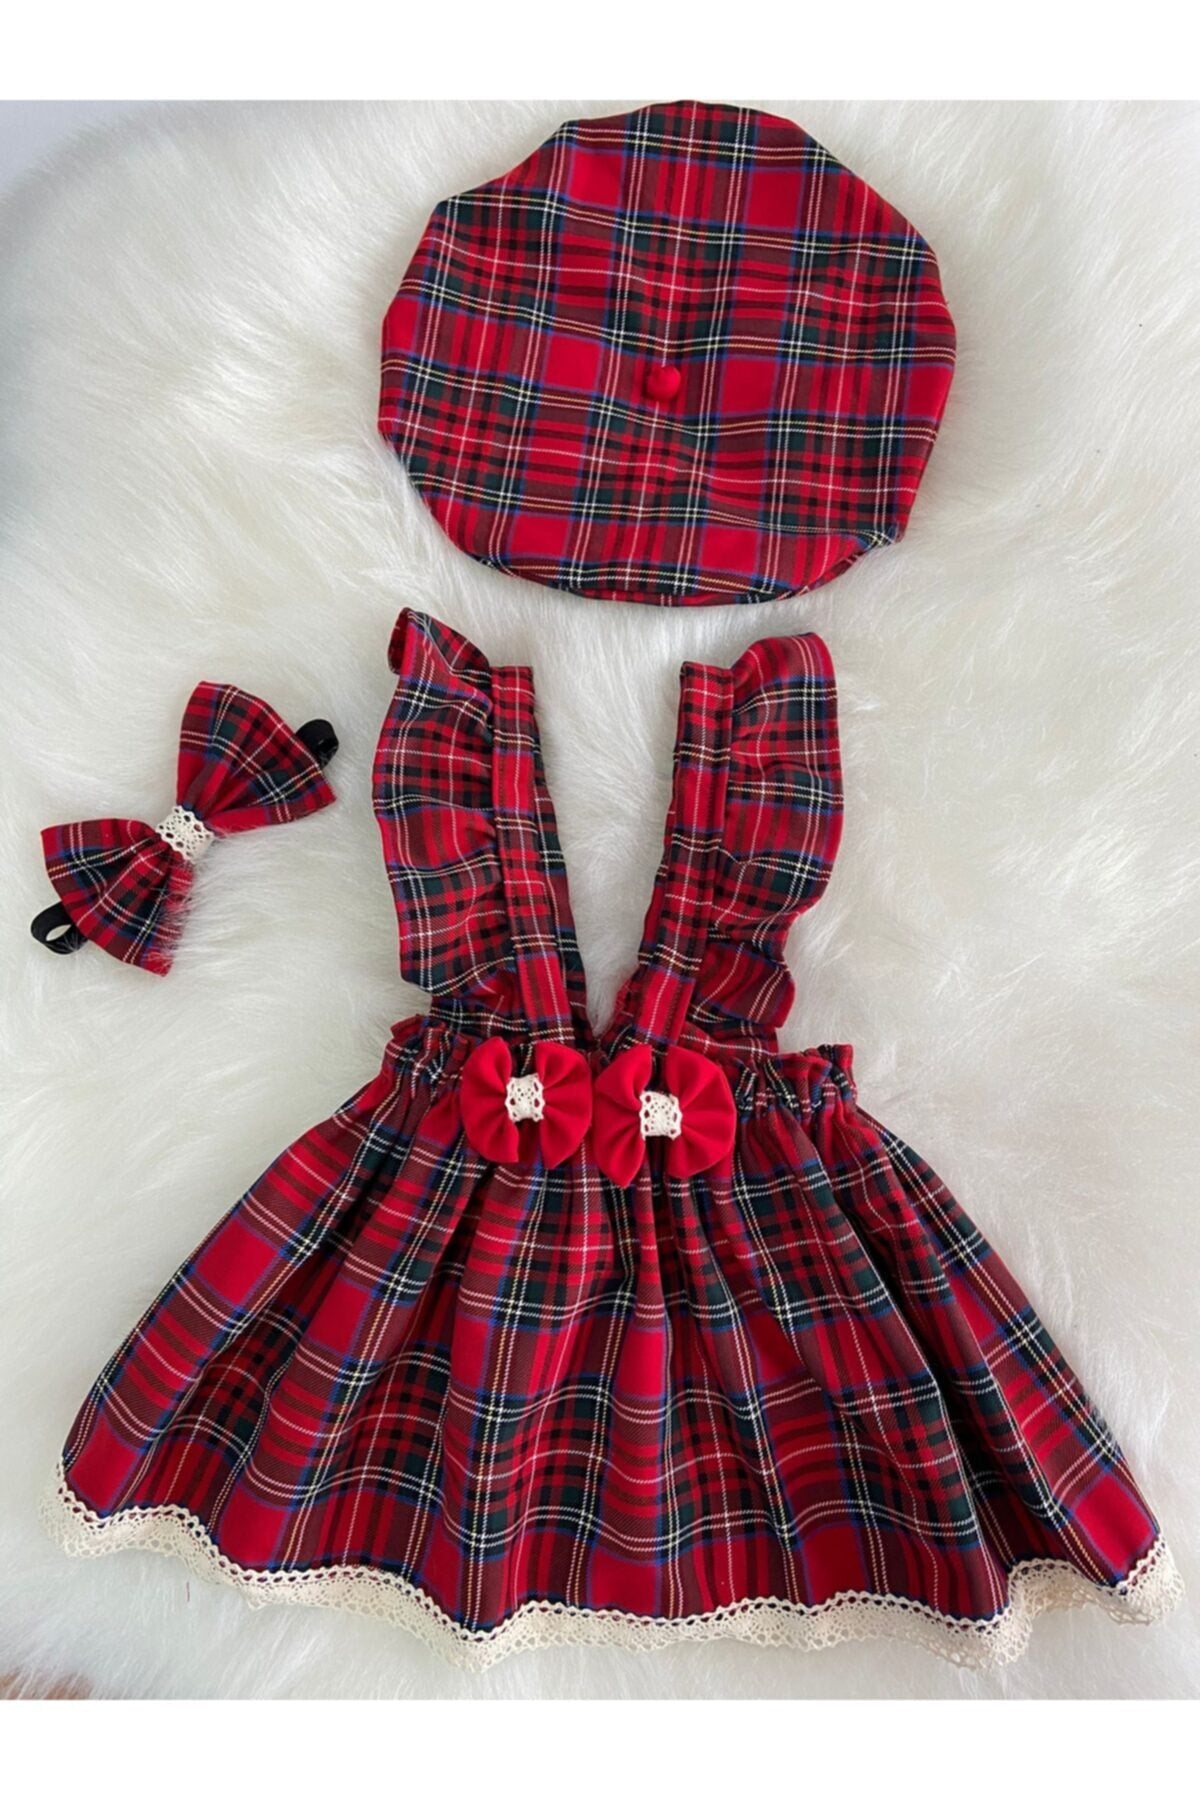 Baby Girl Lacy Red Plaid Dress Bandana Hat Set